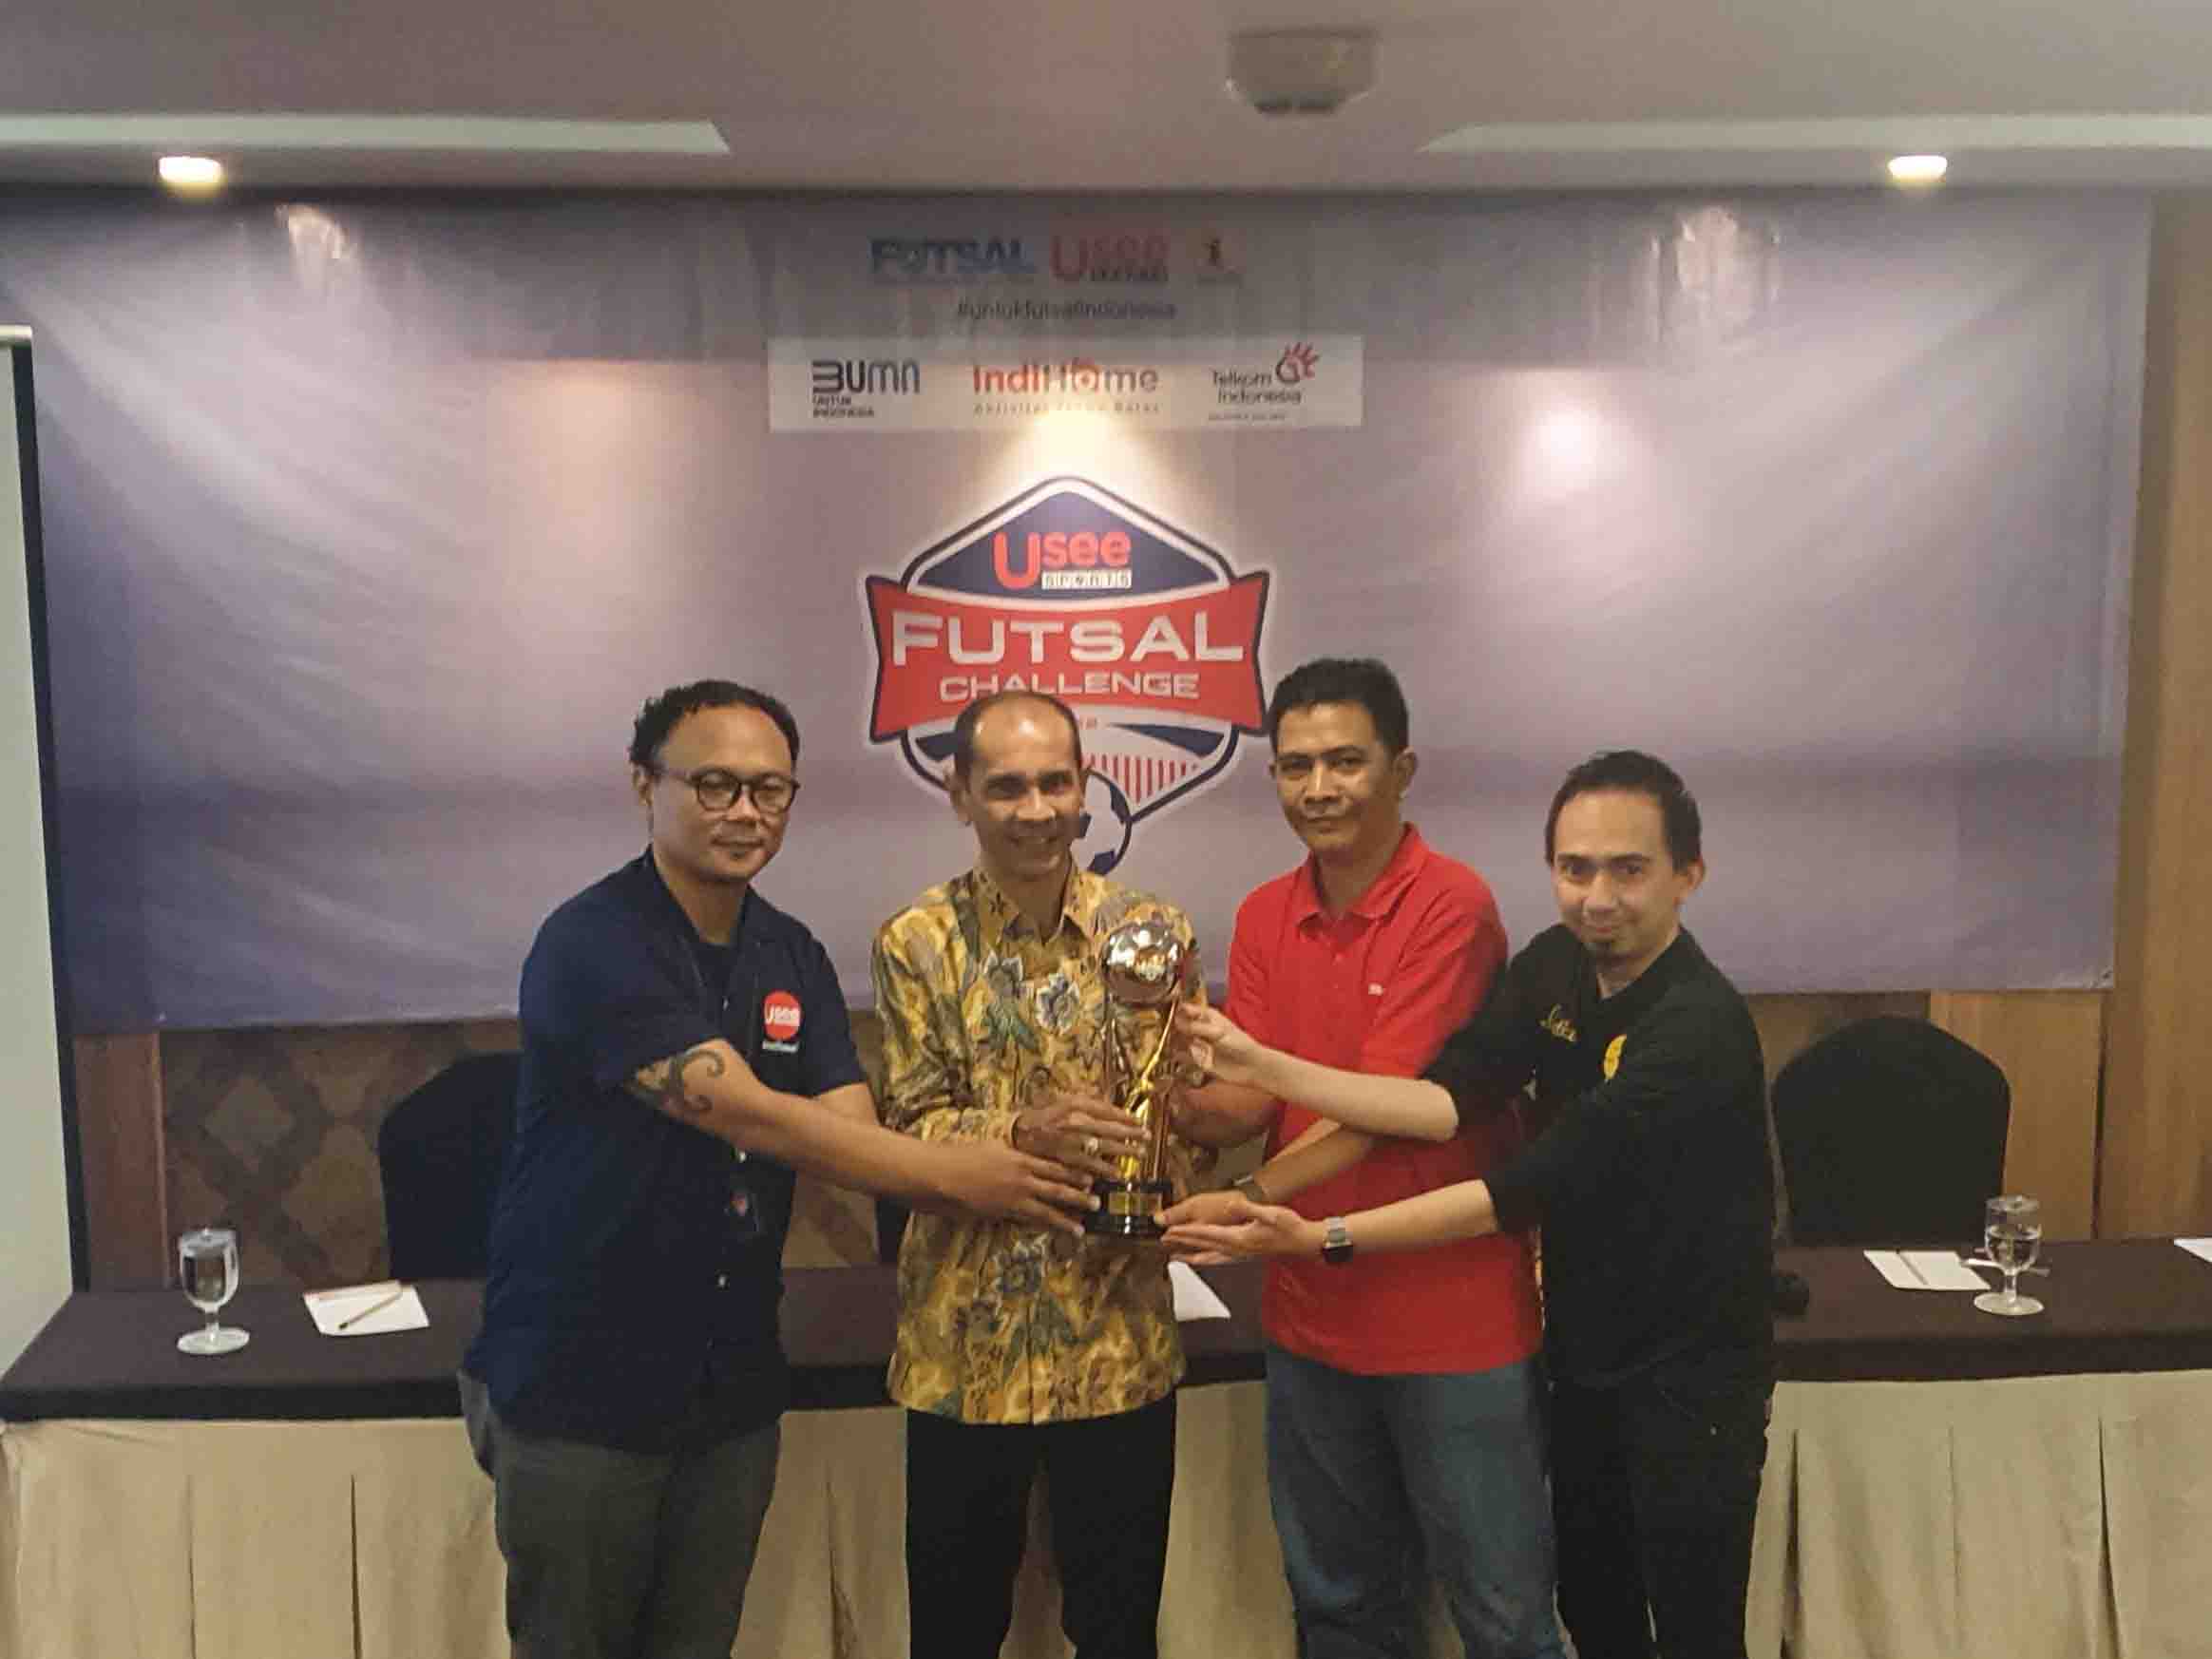 Usee Sports Futsal Challenge 2022 Kini Hadir di Semarang!